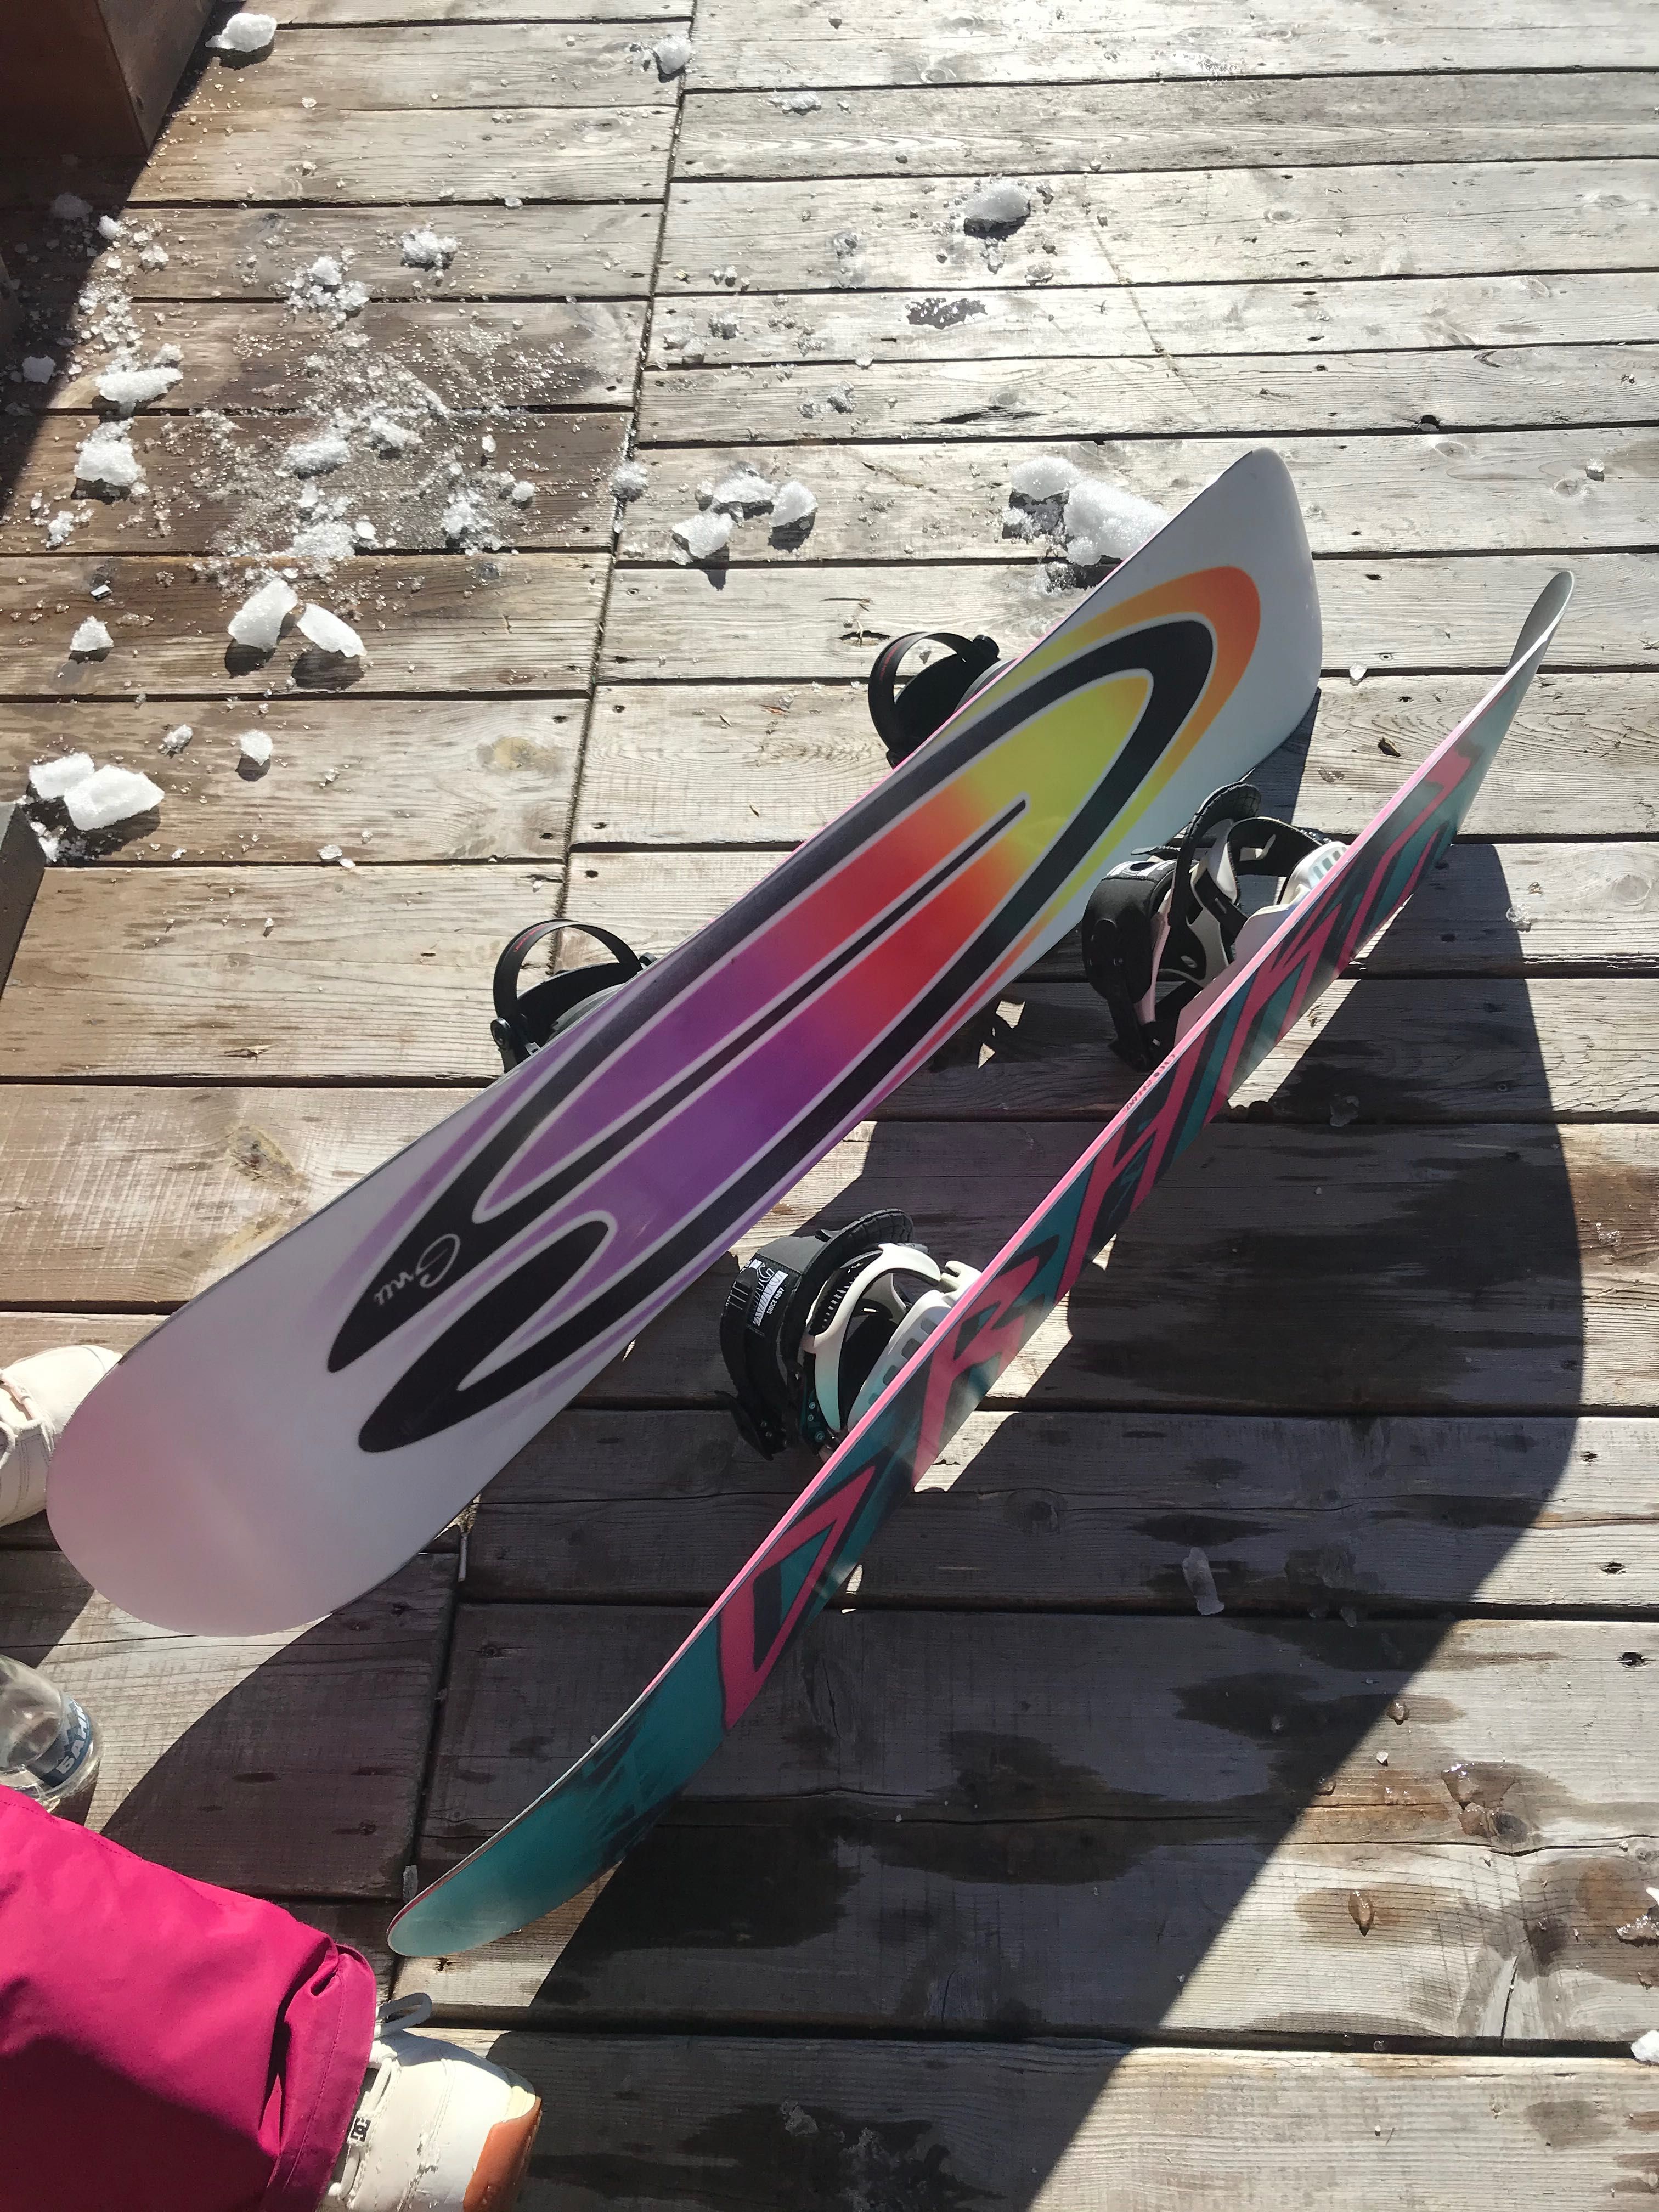 Snowboard GNU B-nice 2020, 145см; сноуборд